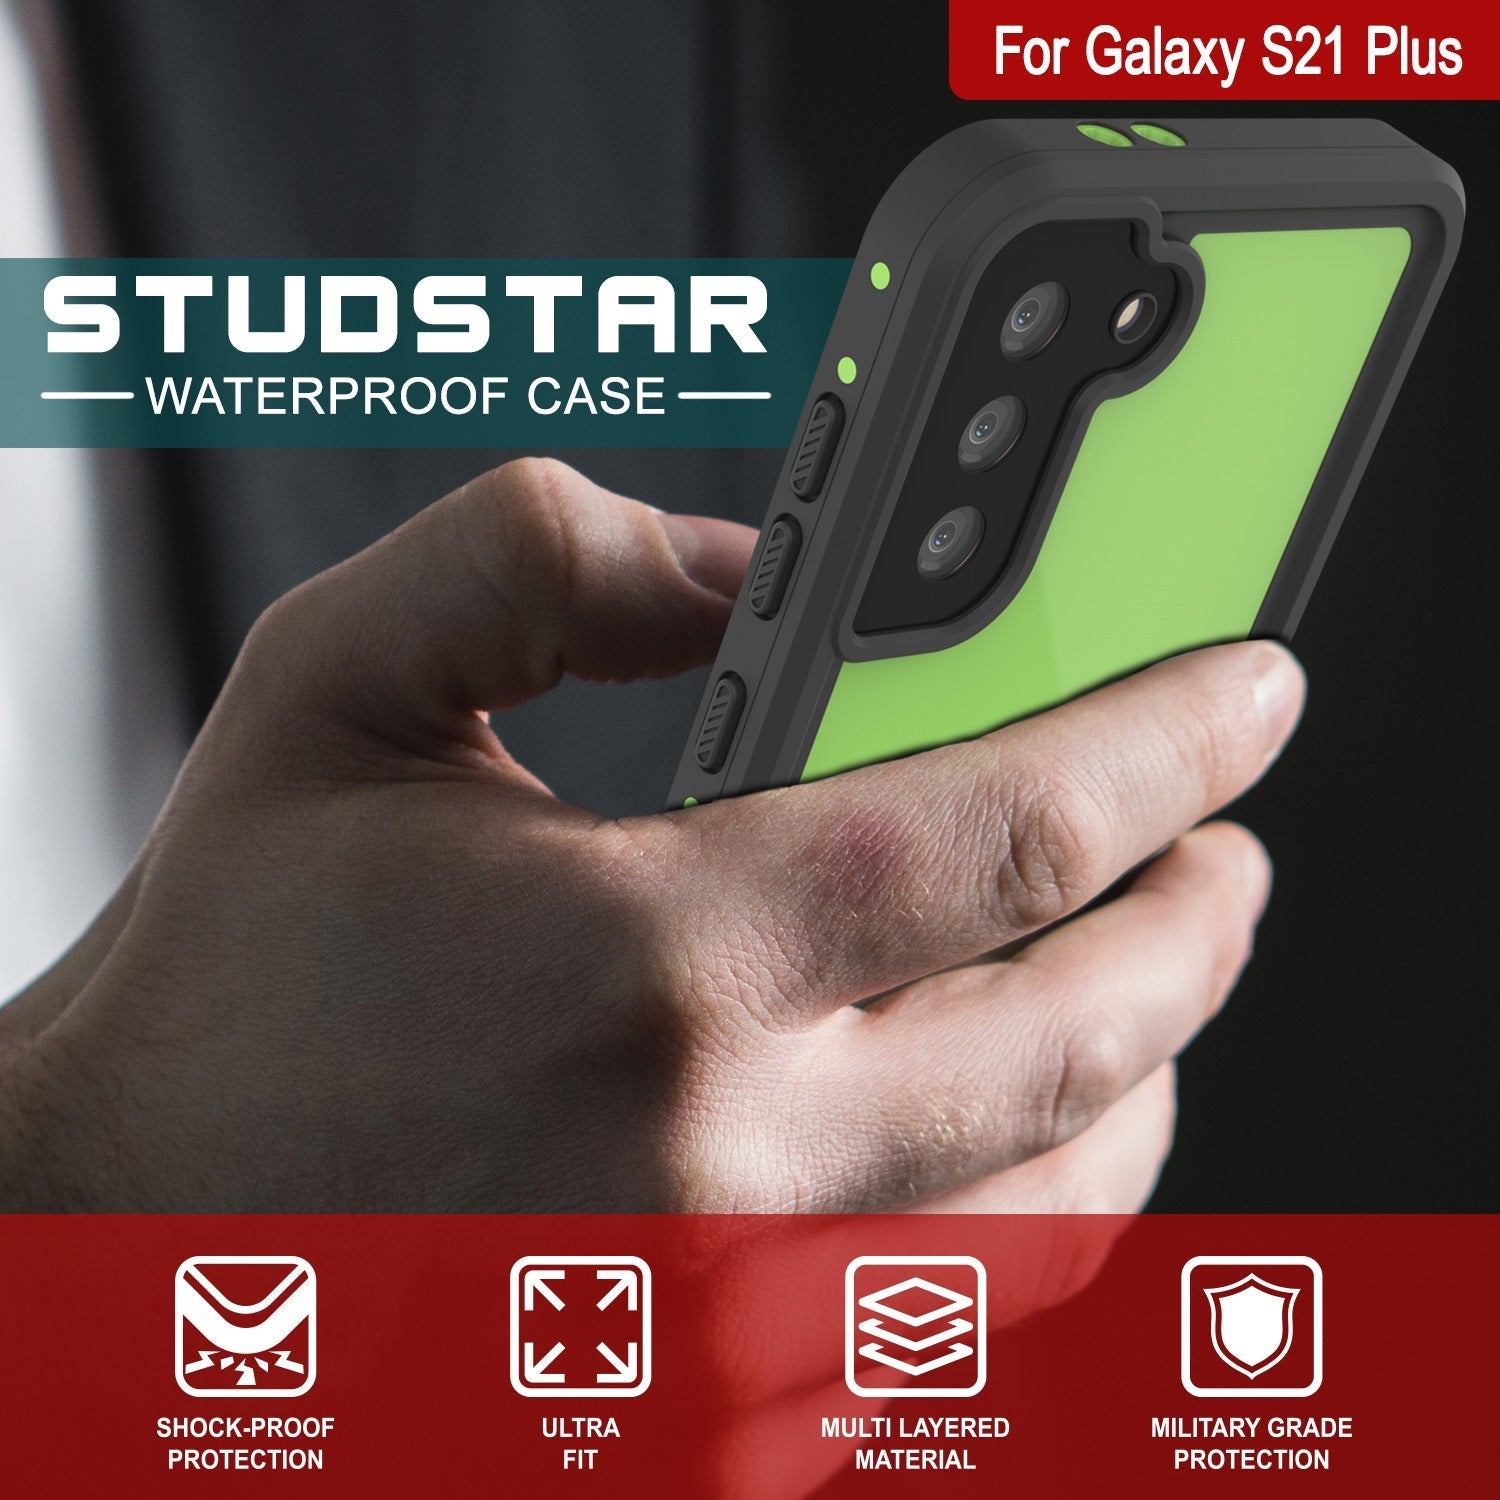 Galaxy S22+ Plus Waterproof Case PunkCase StudStar Light Green Thin 6.6ft Underwater IP68 ShockProof